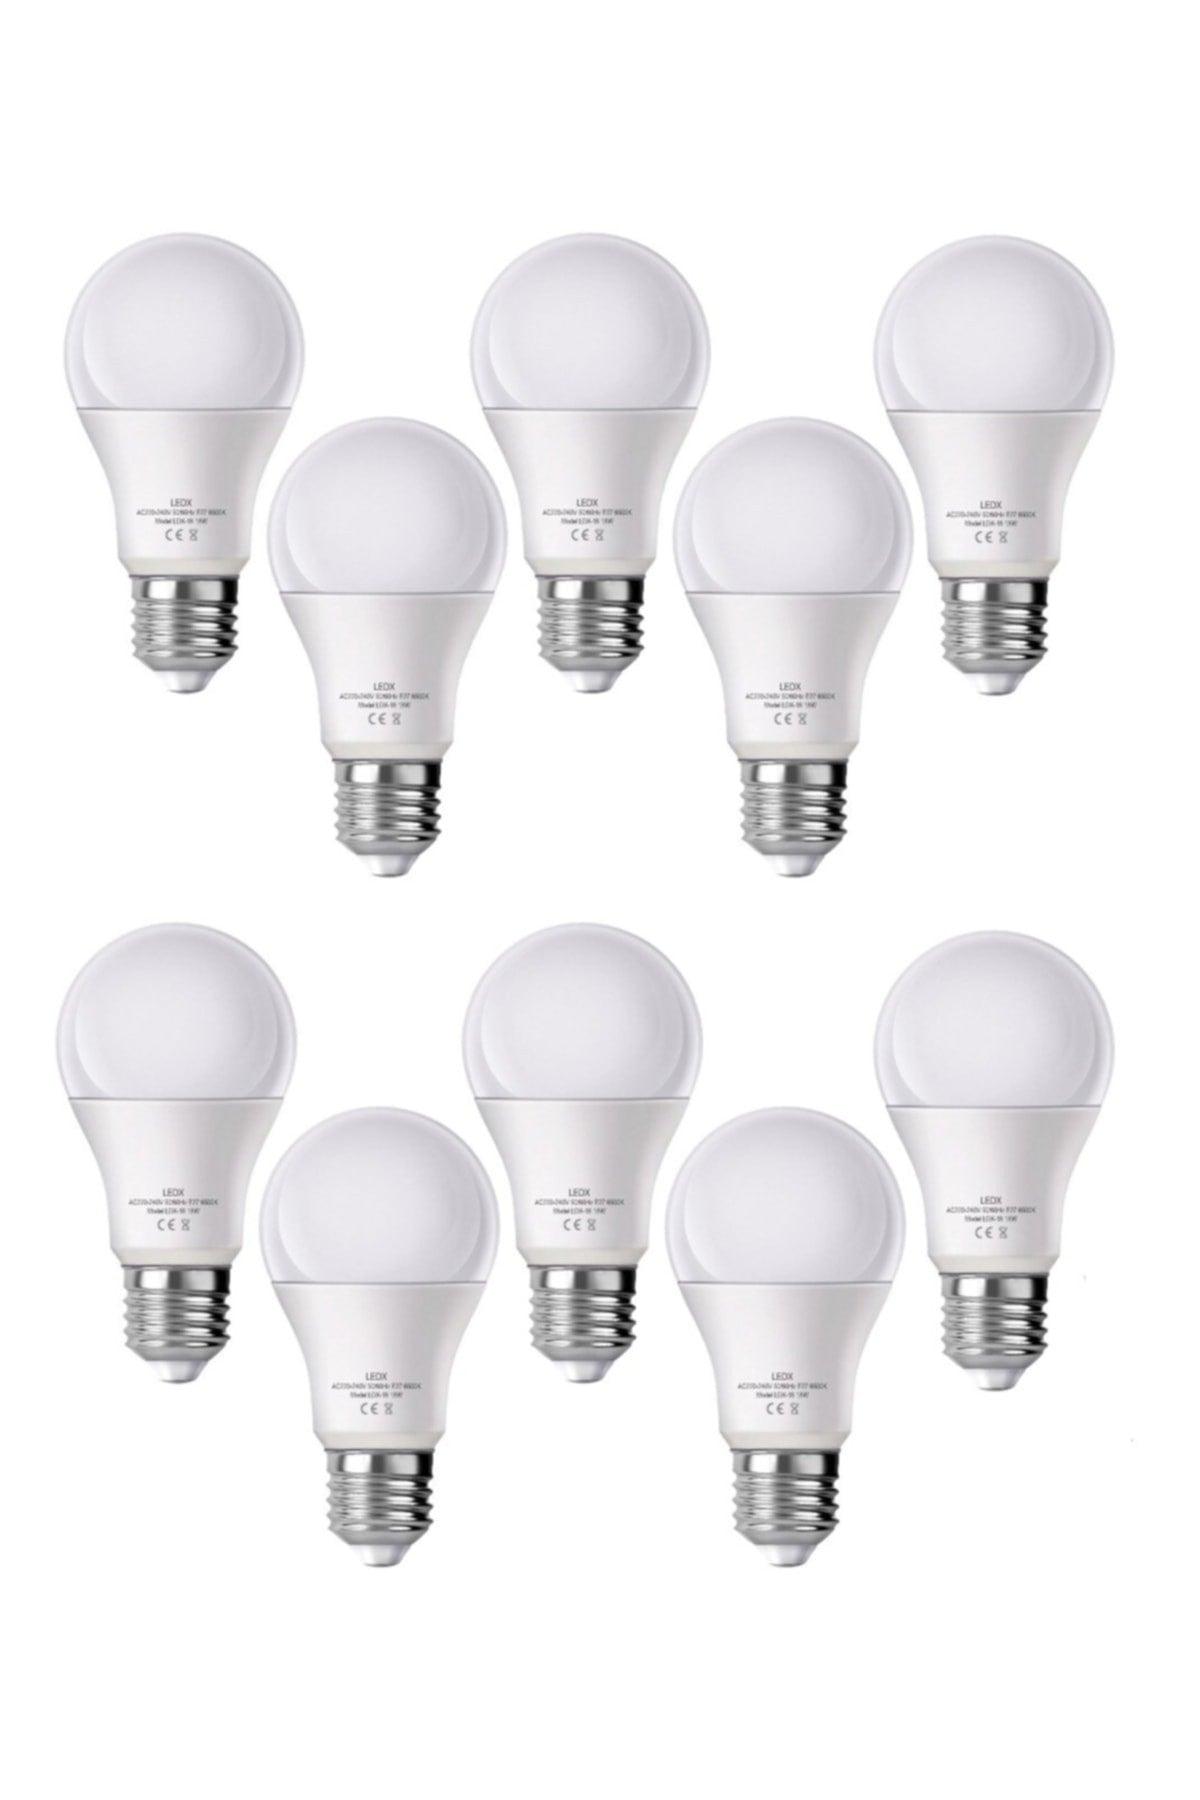 10 Pcs 12w Led Bulbs White Color 1080 Lumens